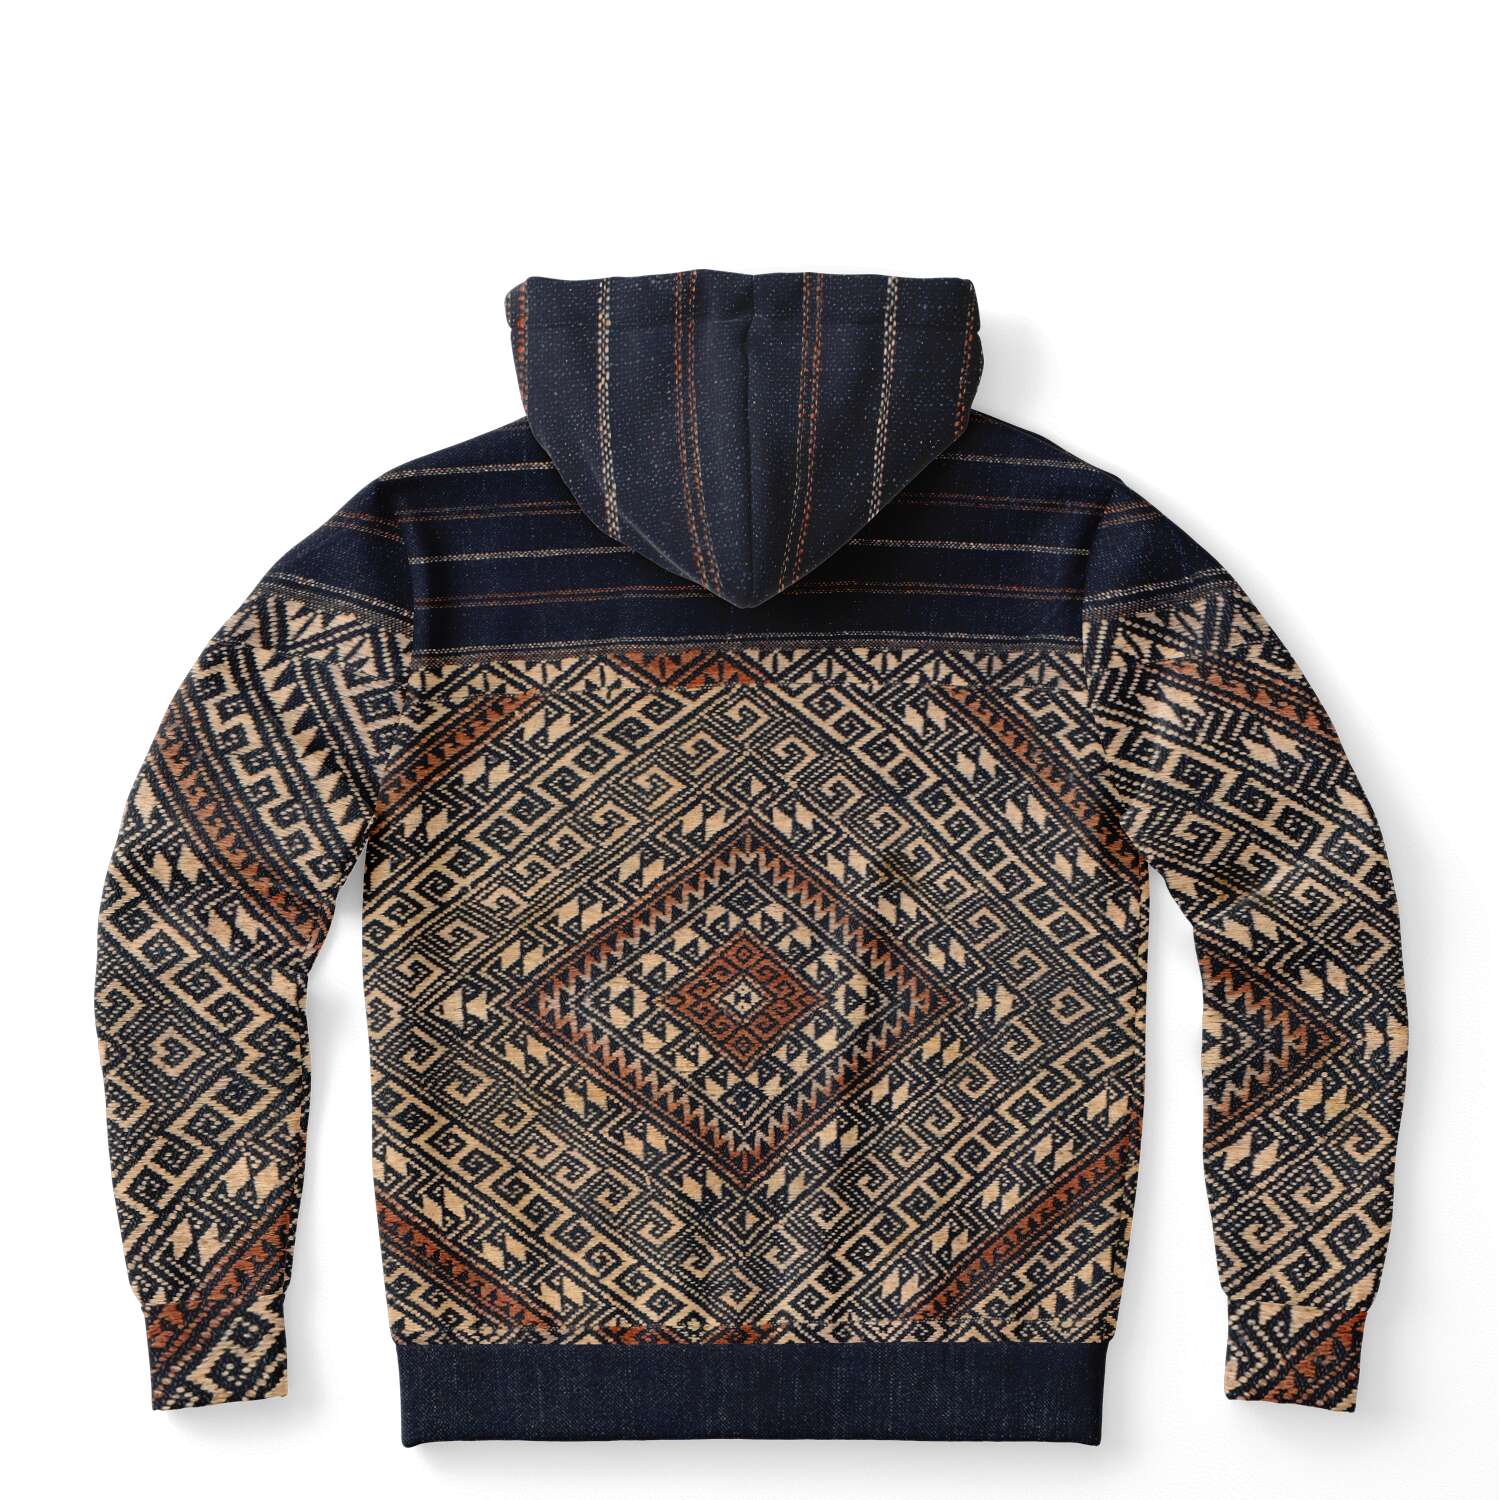 Fashion Hoodie - AOP Rare Miao Traditional Textile | SE Asian Batik Ikat Vintage Gift | Boho Kuba, Kilim, Ethnic Shaman Jacket | Pullover Tribal Hoodie